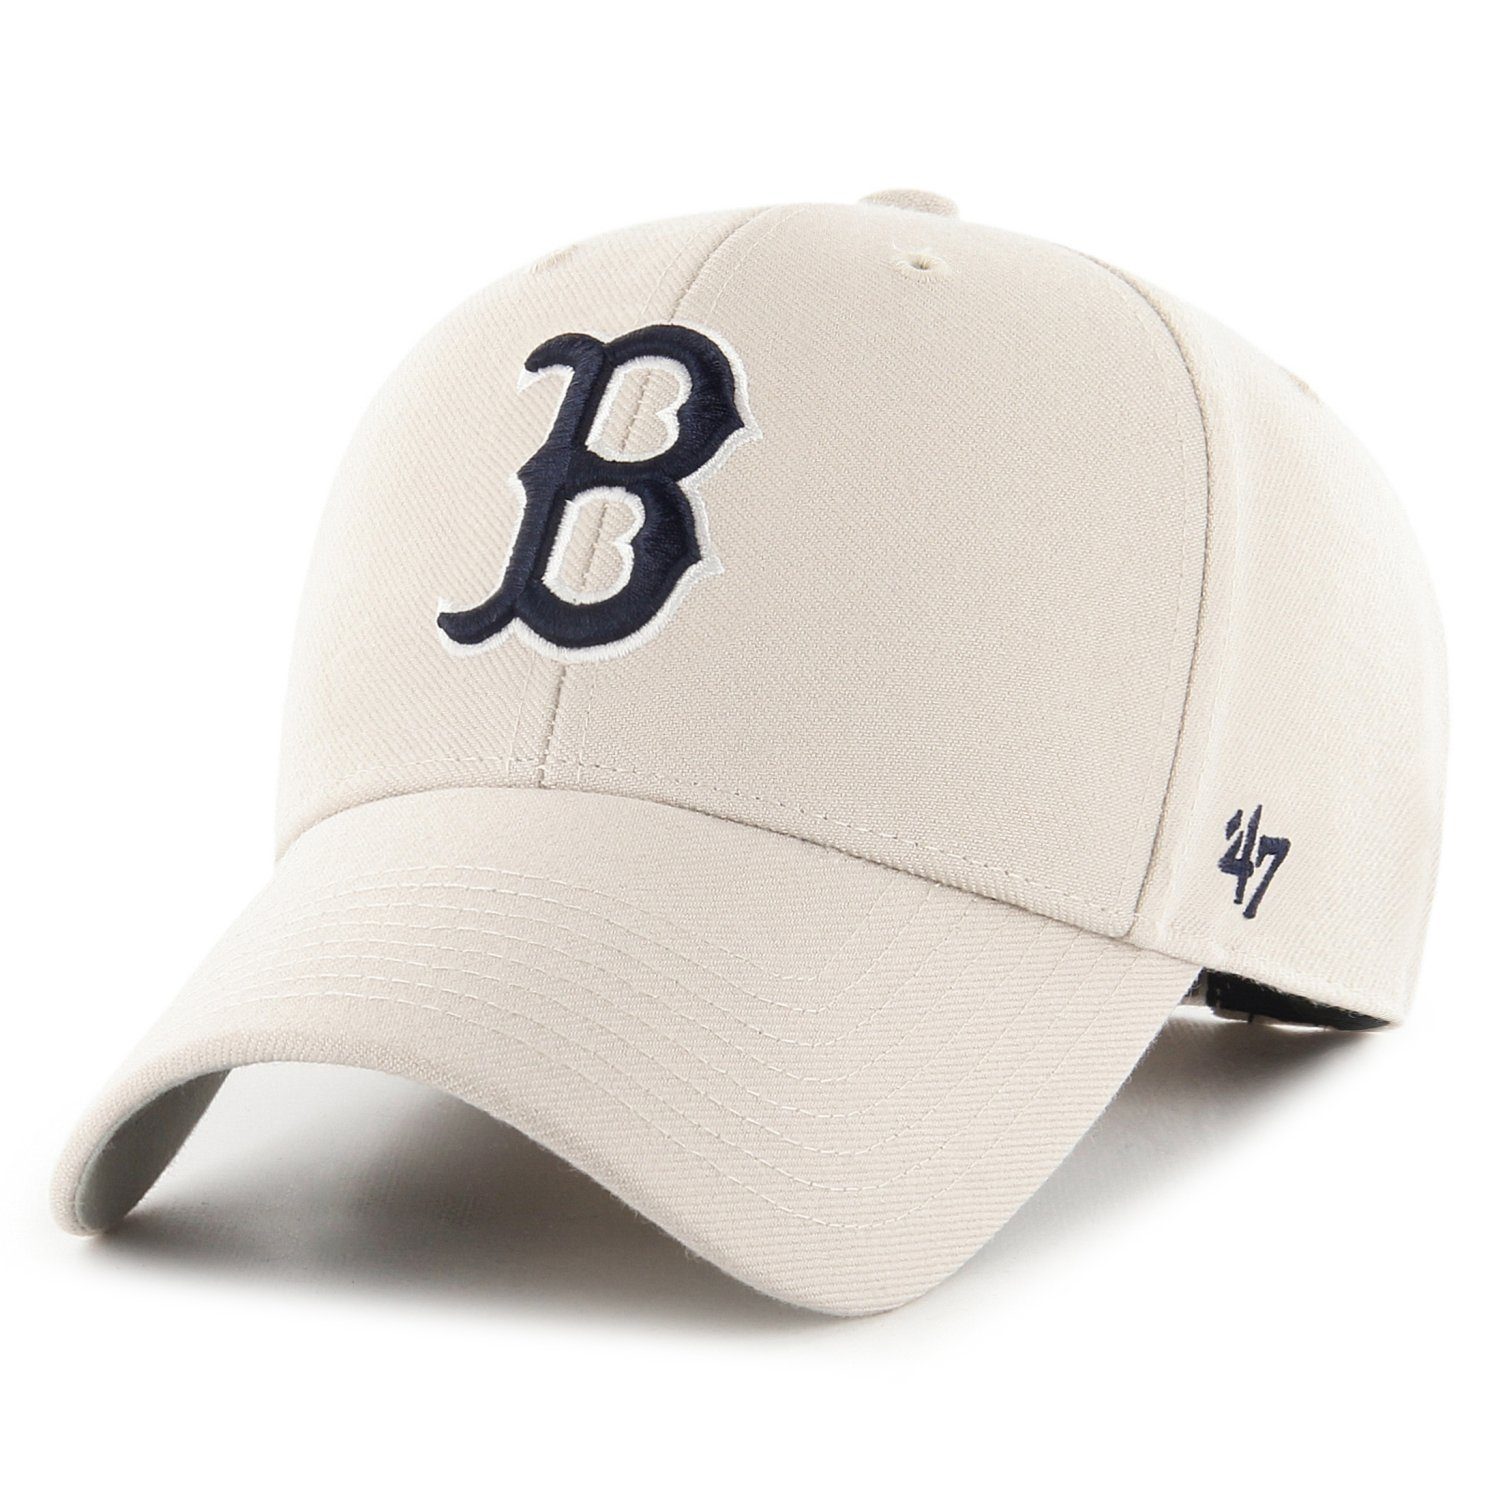 '47 Brand Trucker Cap Relaxed Fit MLB Boston Red Sox bone